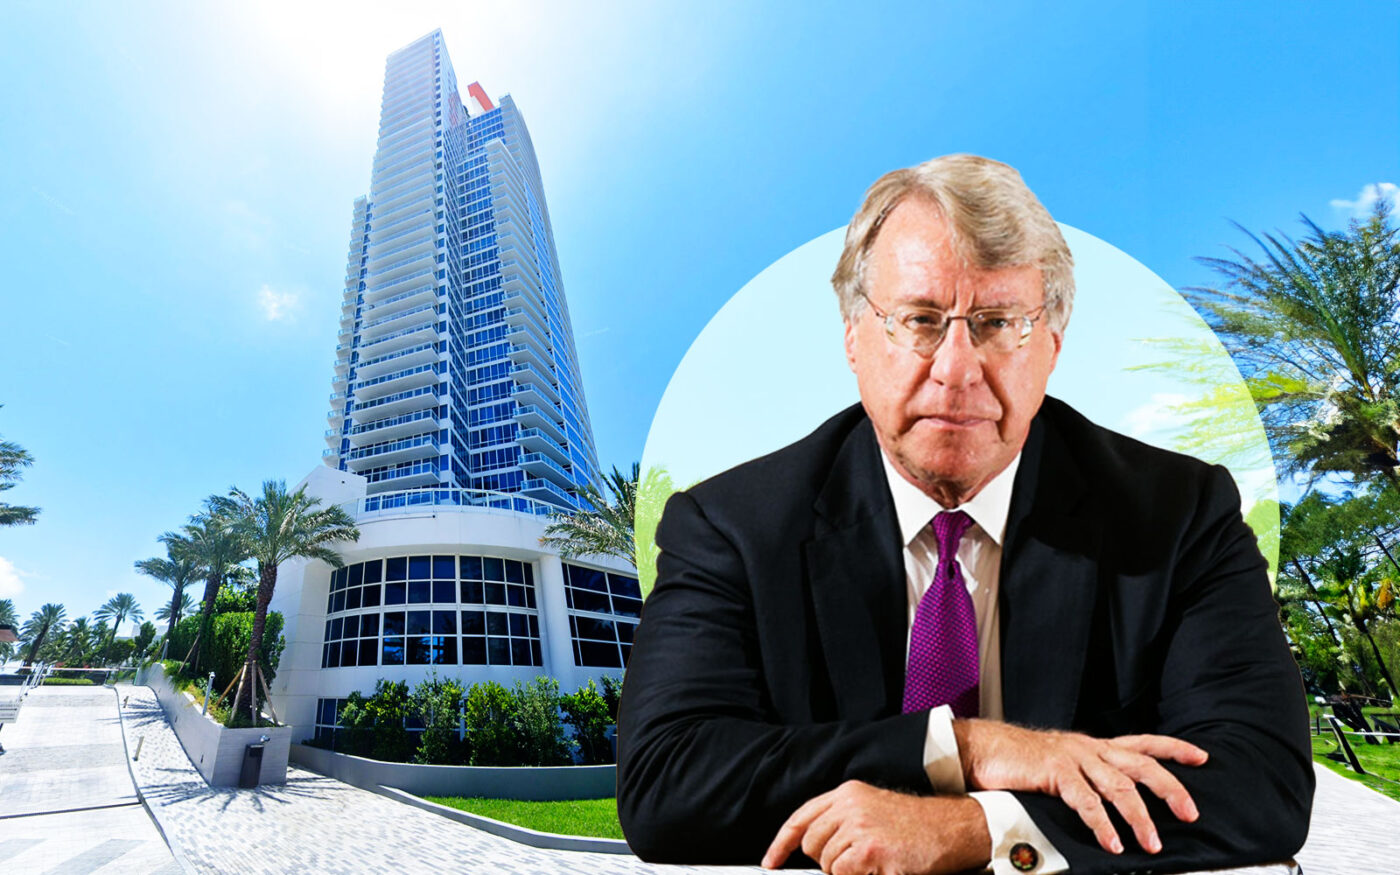 Enron Short Seller Jim Chanos Sold Miami Beach Unit for $18M